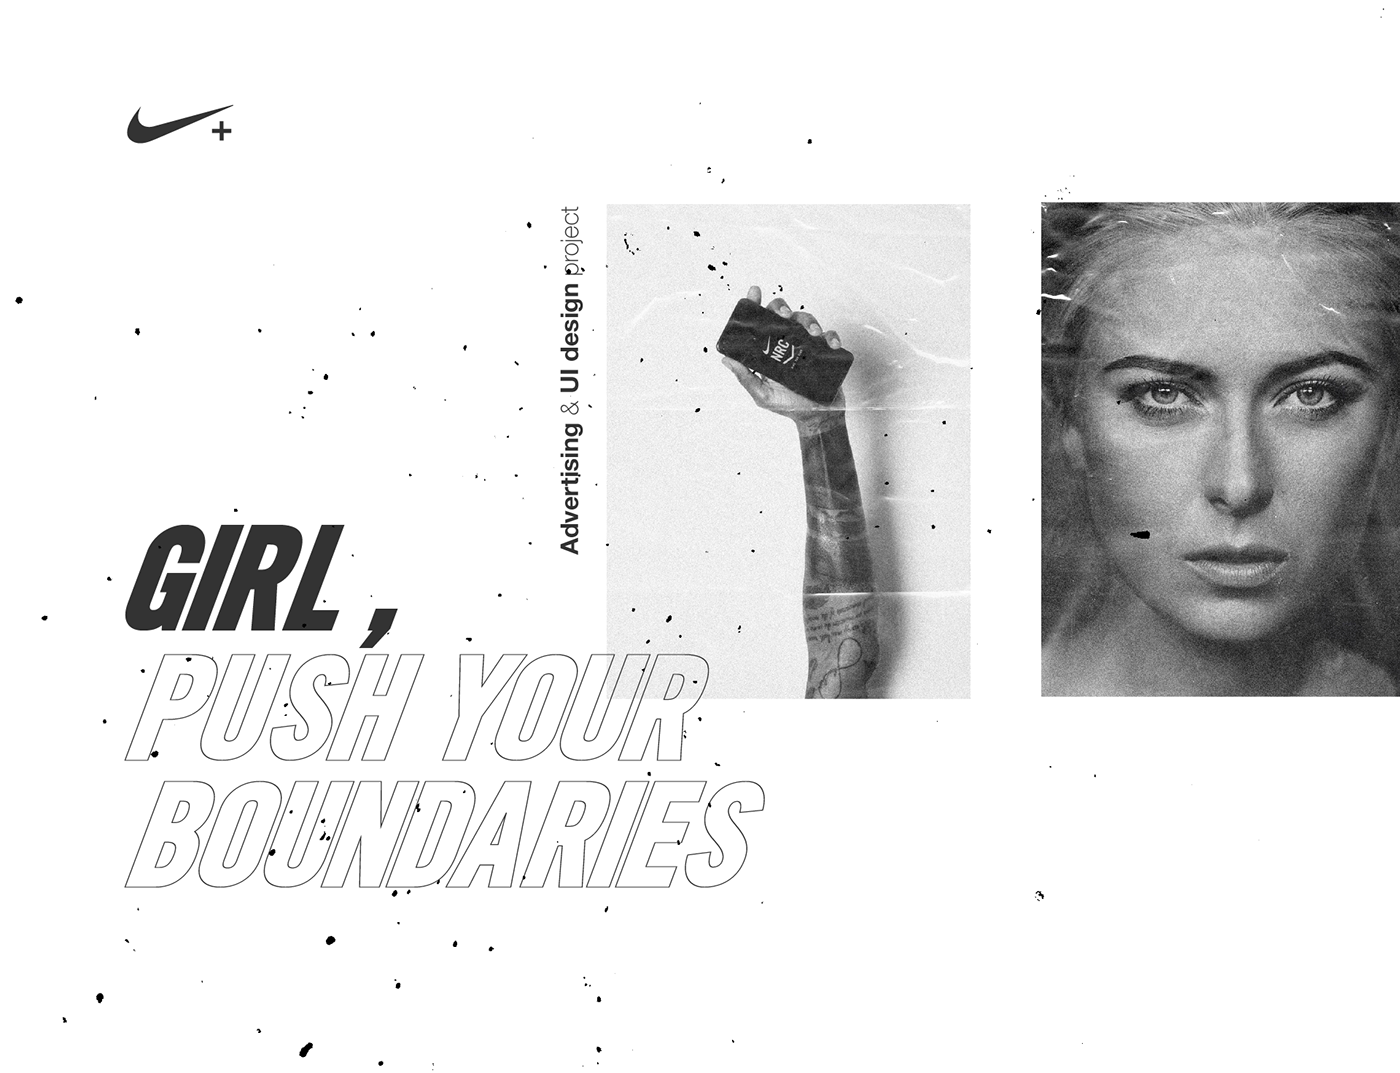 Advertising  application boundaries challenge girl Nike running sport UI ux